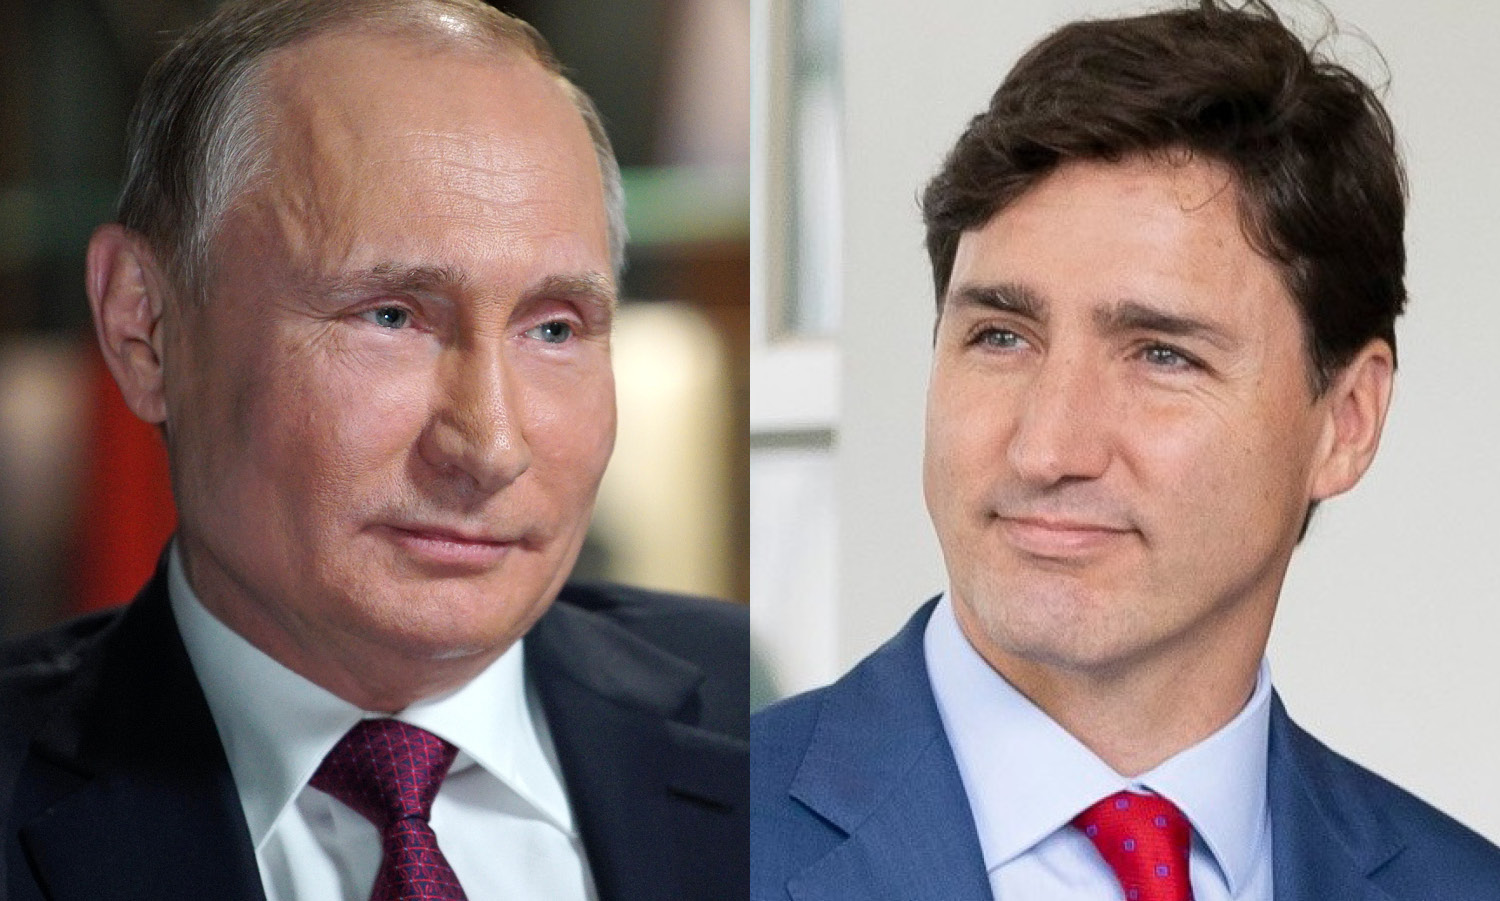 Photos of Putin and Trudeau